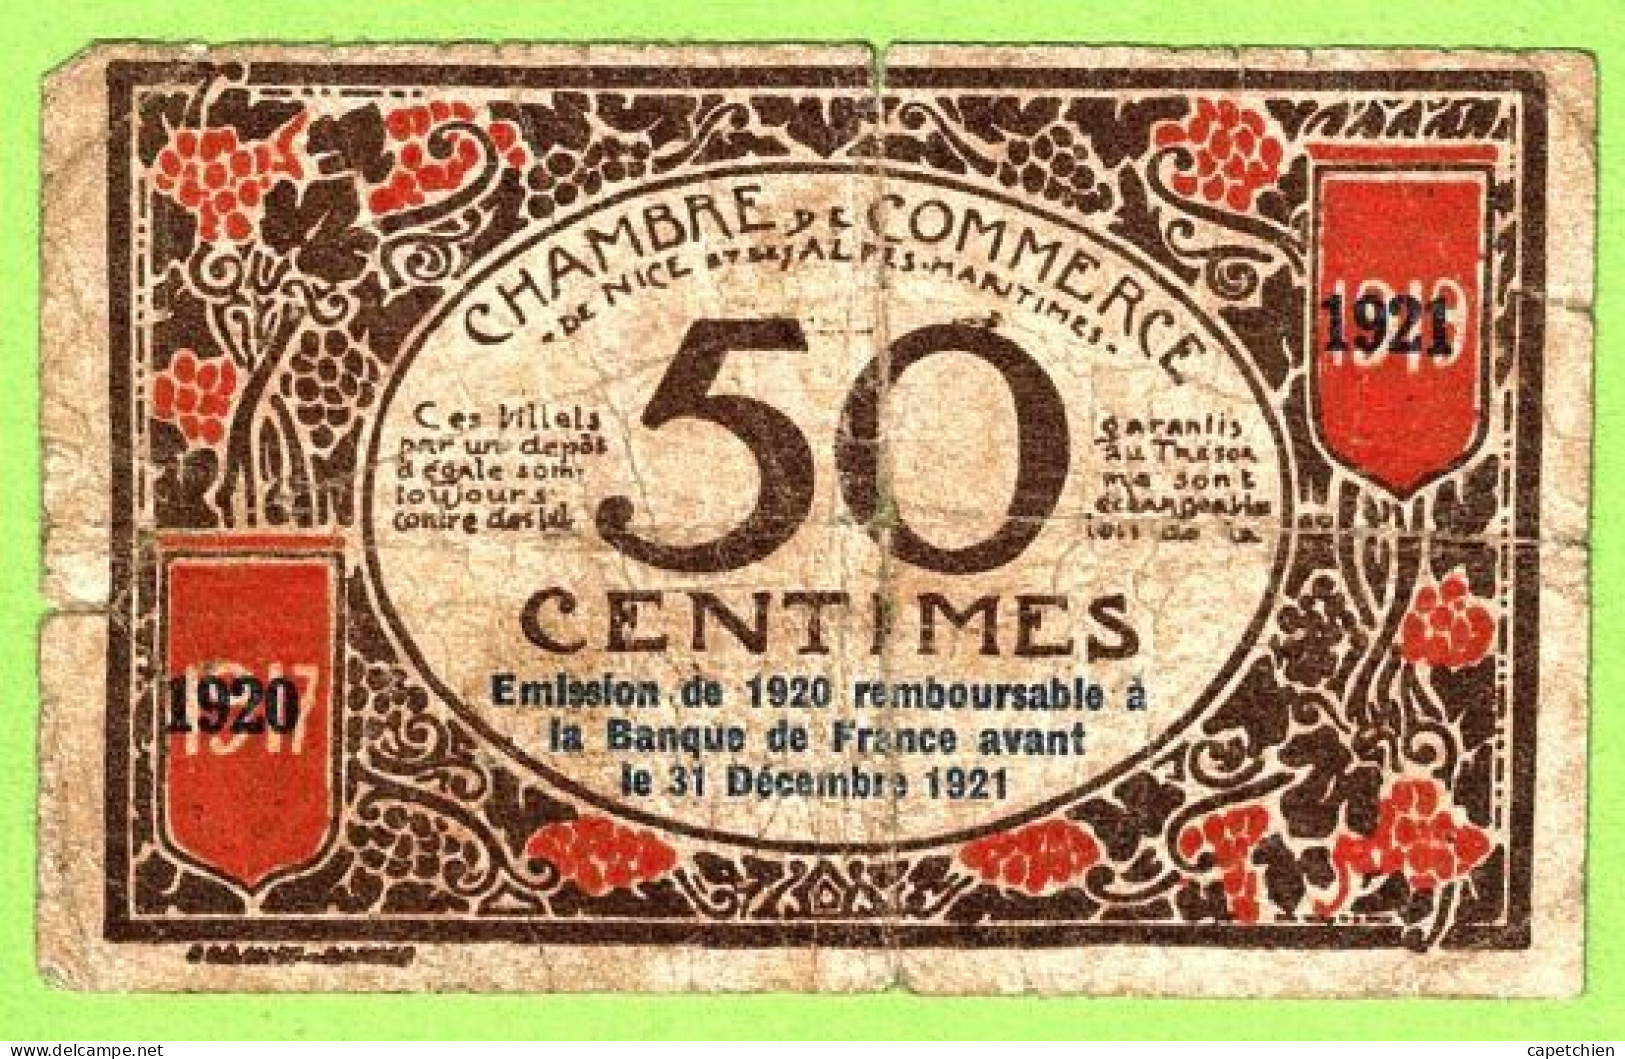 FRANCE / CHAMBRE De COMMERCE / NICE - ALPES MARITIMES / 50 CENTIMES / 1917 - 1921 SURCHARGE 1920 - 1921 / N° 00374 - Handelskammer